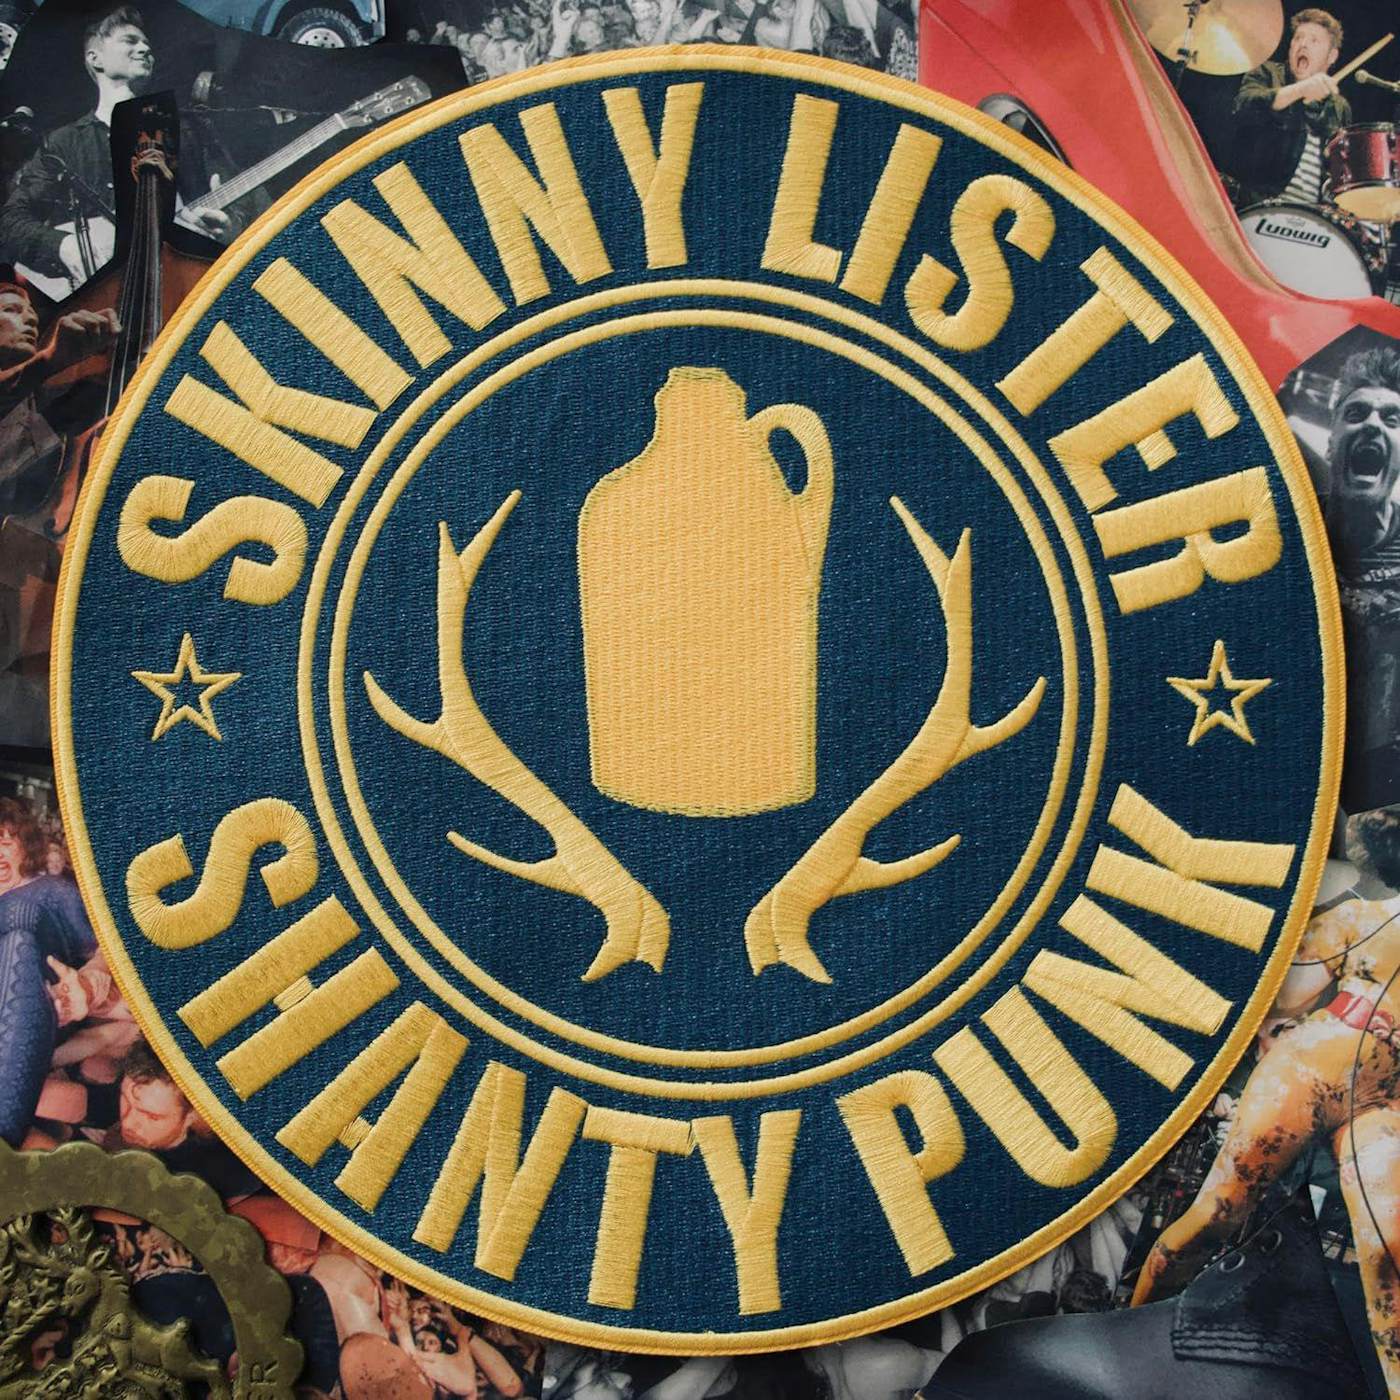 Skinny Lister Shanty Punk (Yellow) Vinyl Record